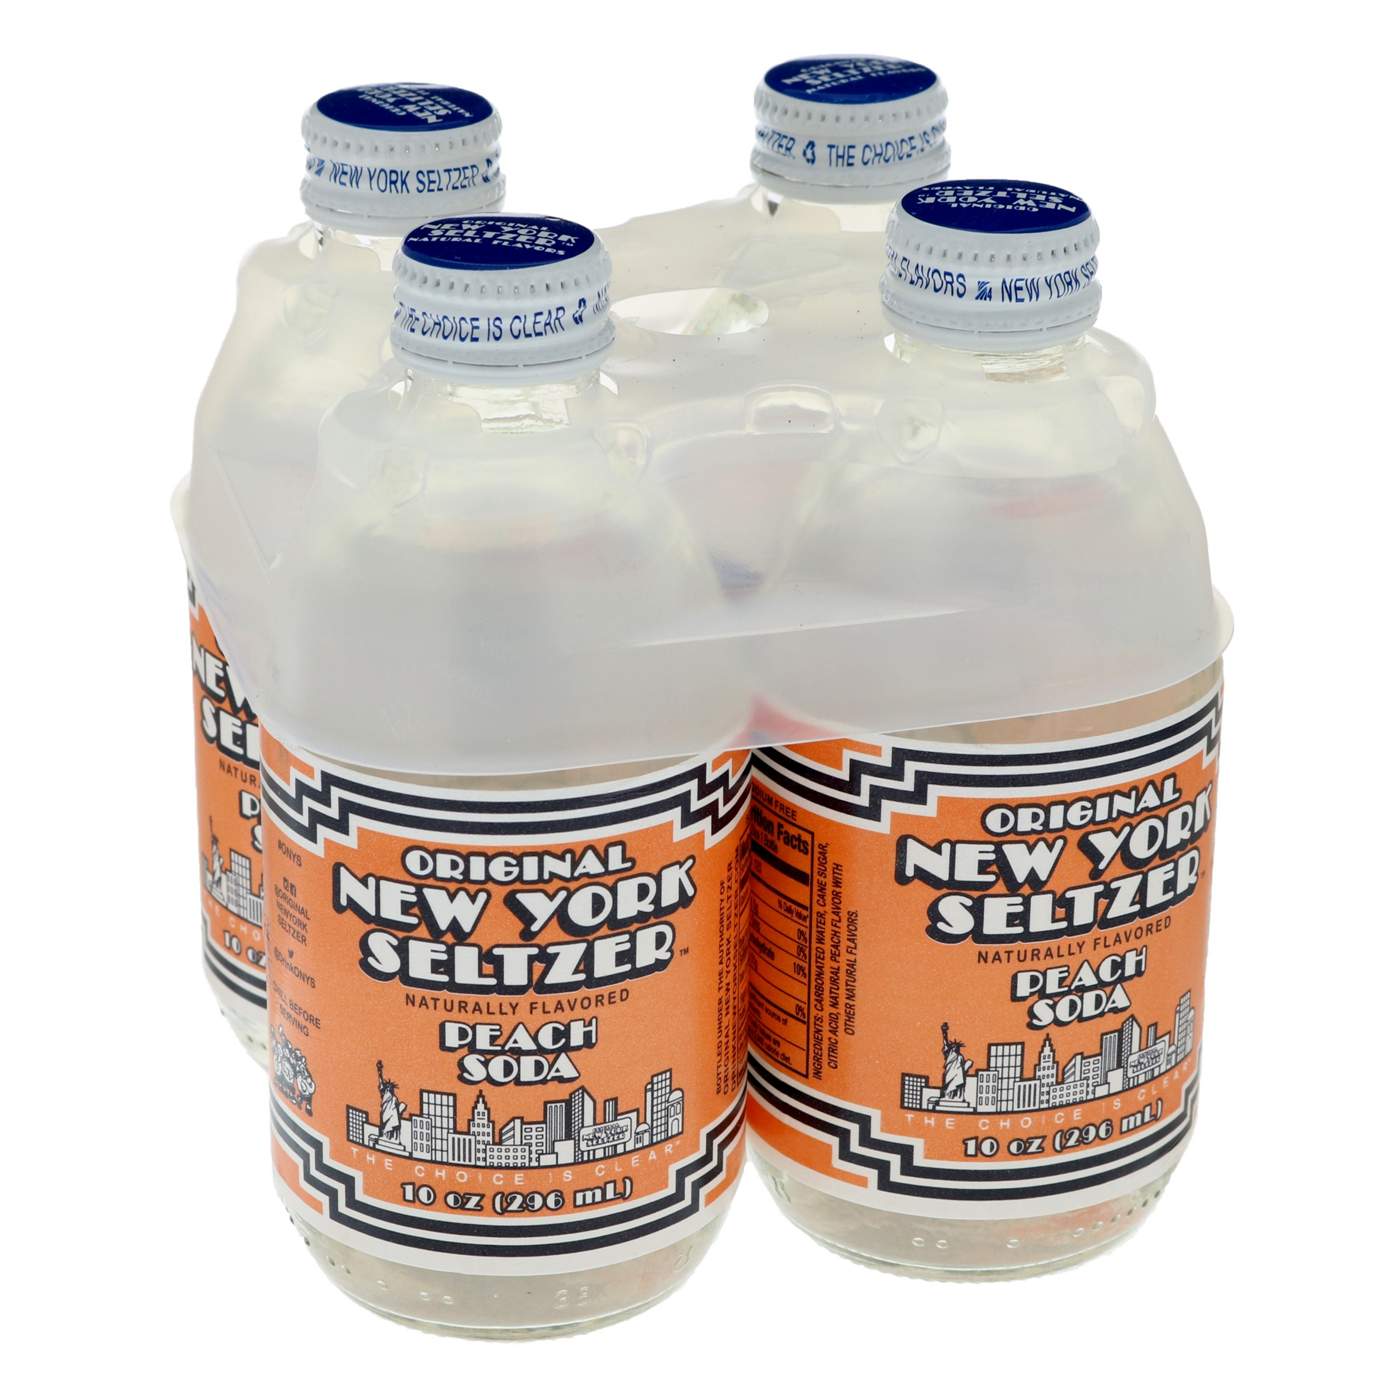 Original New York Seltzer Peach Soda; image 1 of 3